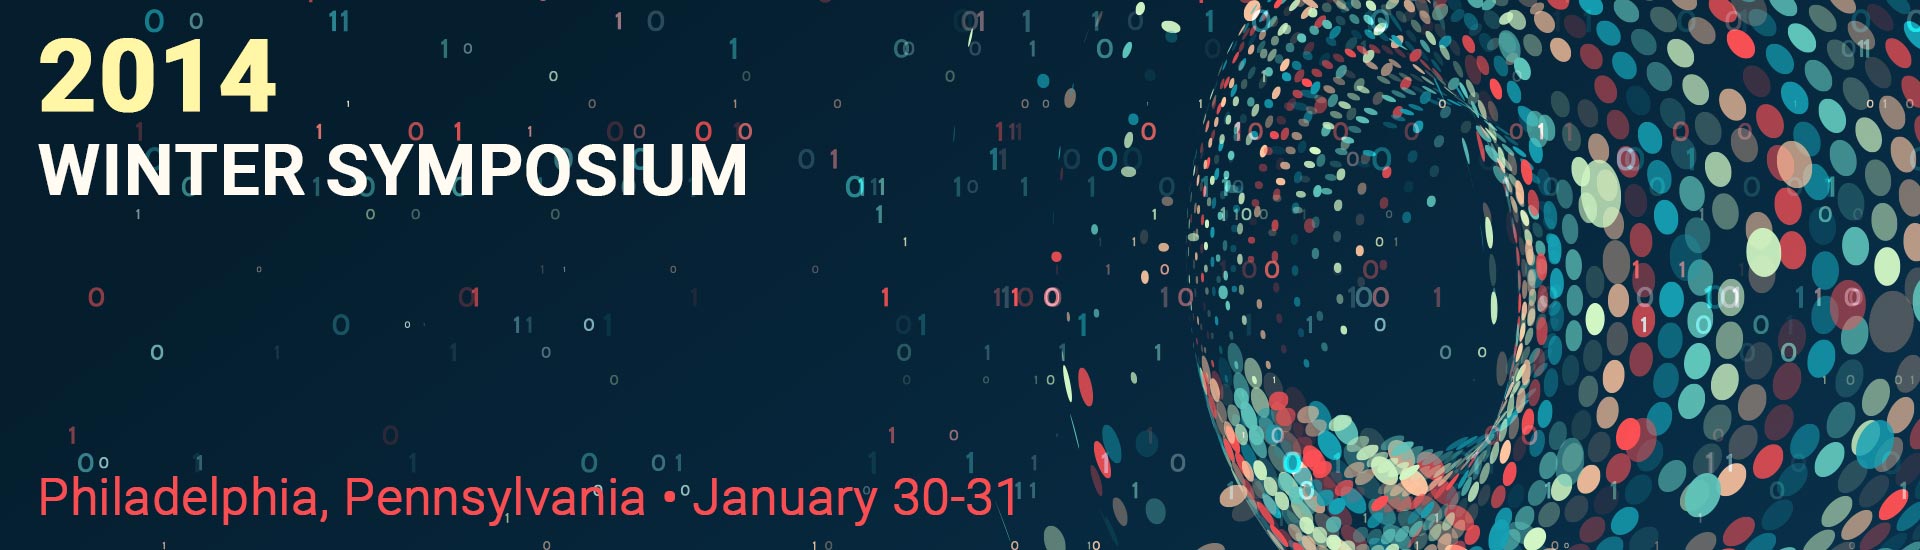 2014 Winter Symposium • Philadelphia, Pennsylvania • January 30-31